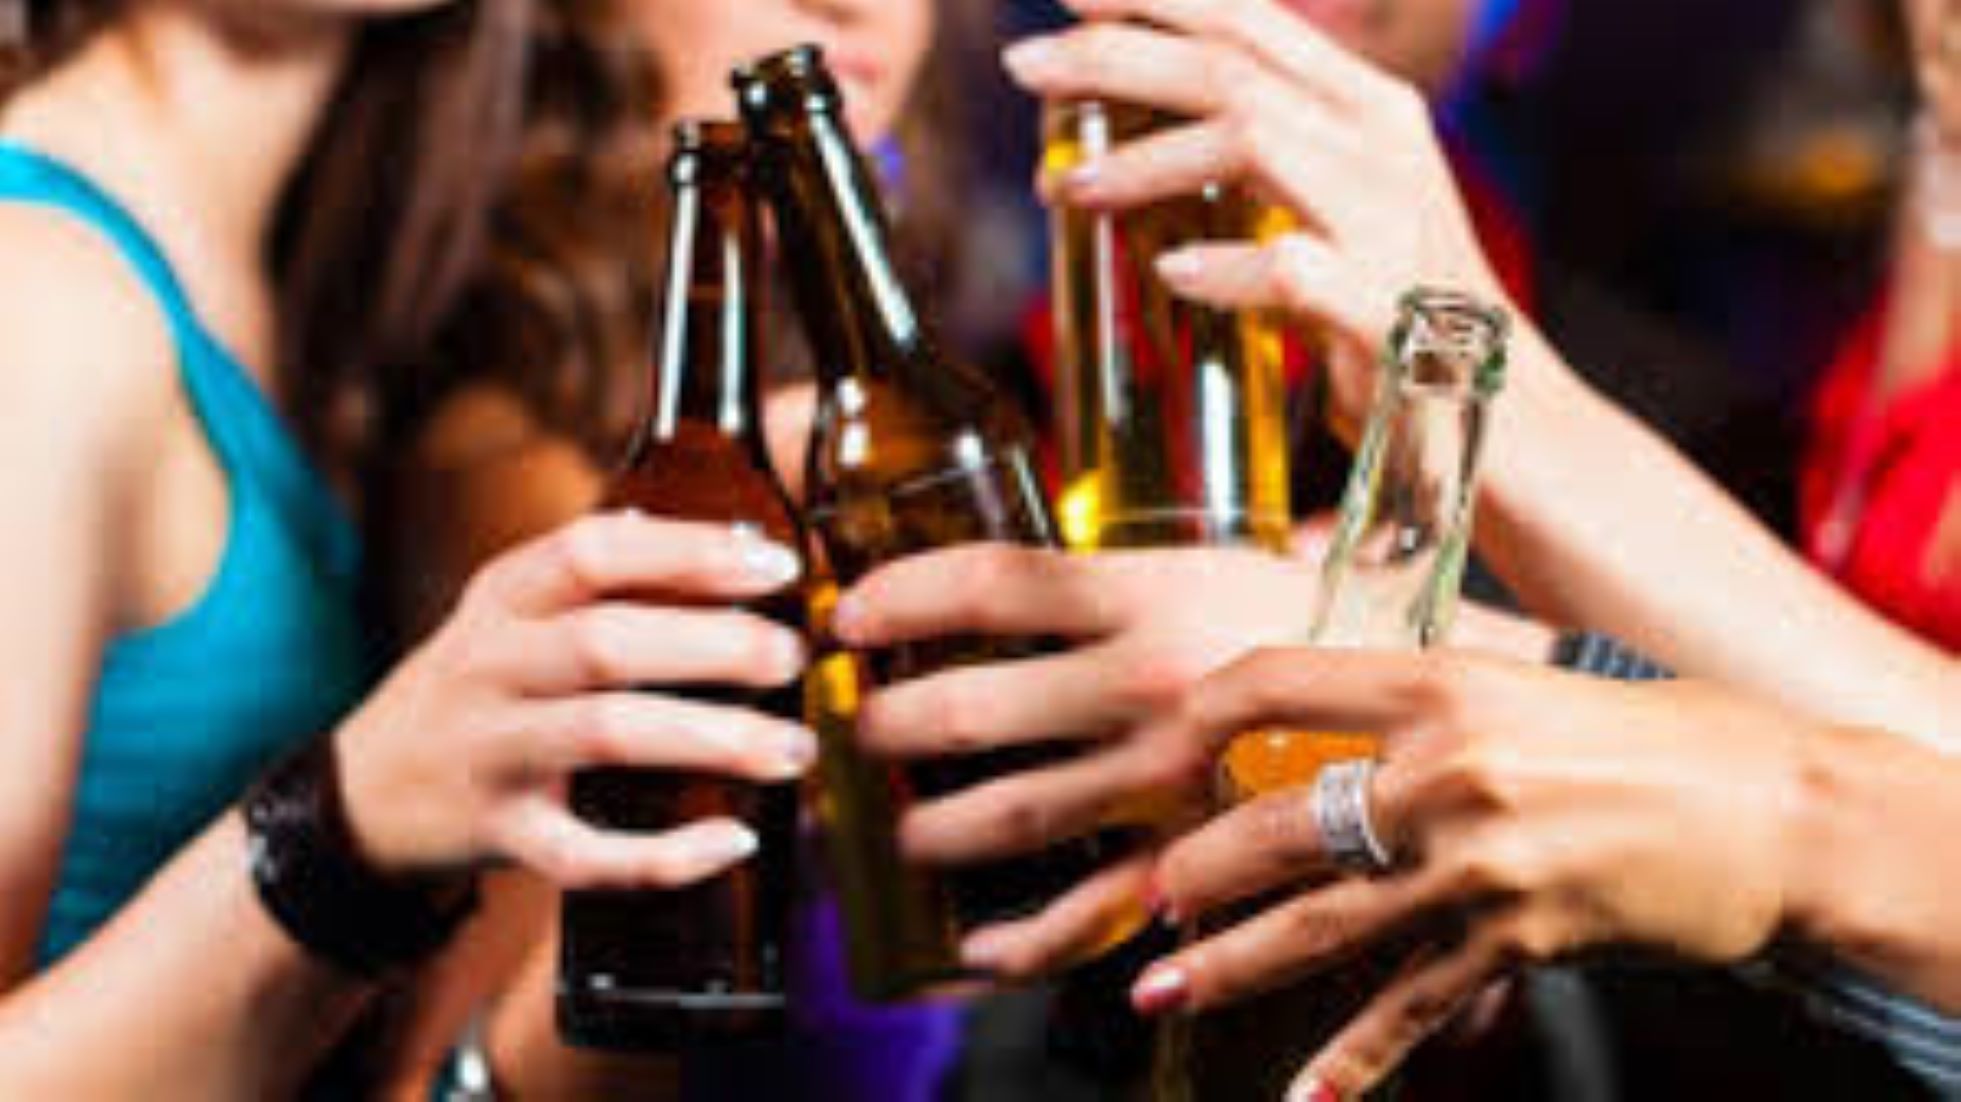 Over Three Percent Australian Women Drink High-Risk Levels Of Alcohol